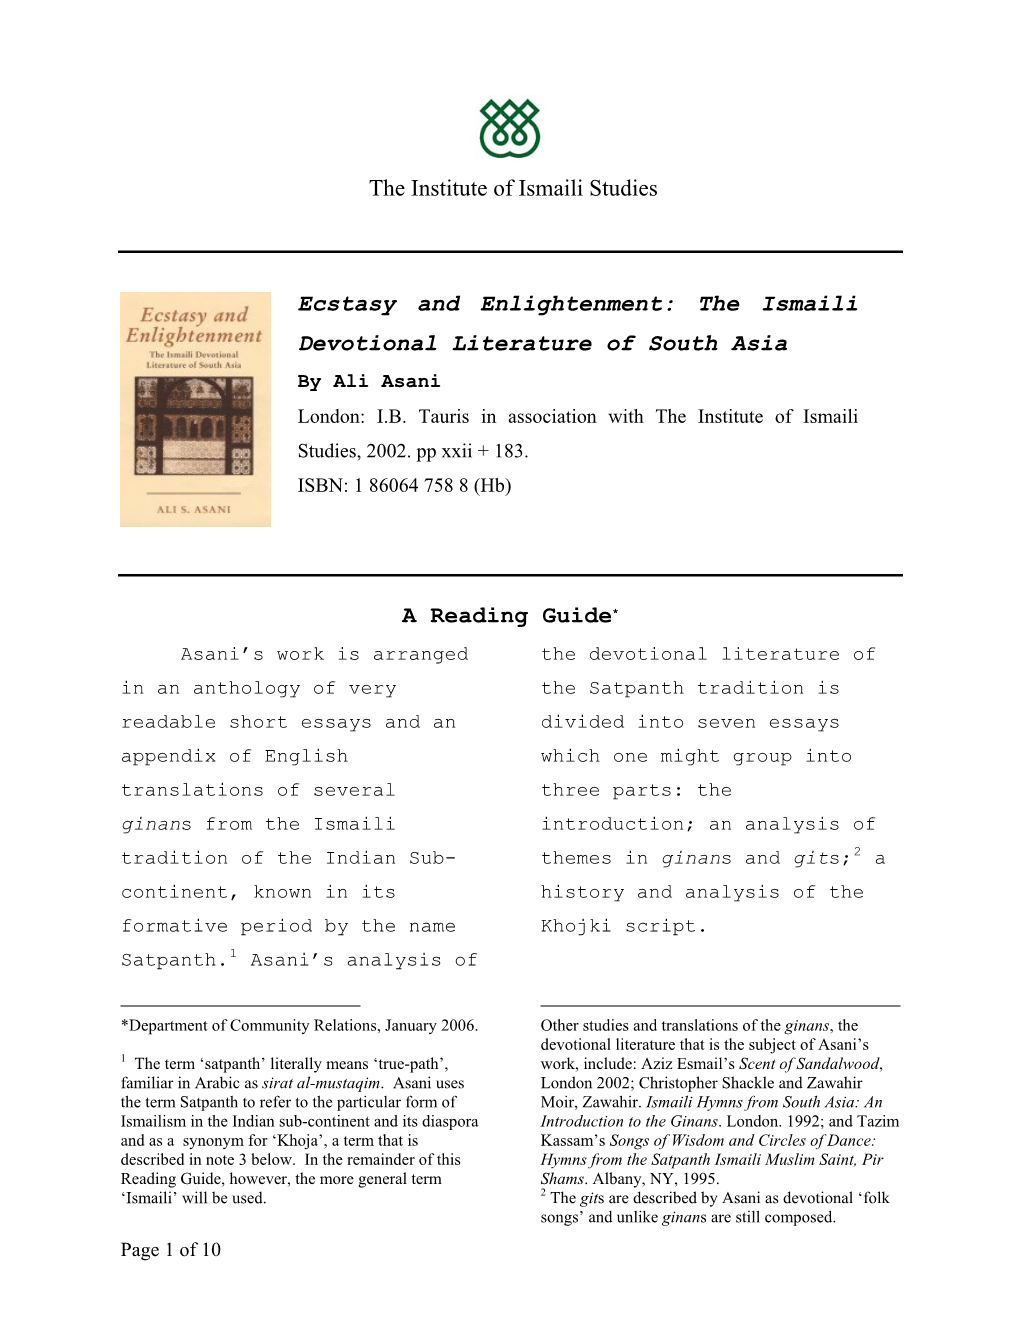 The Ismaili Devotional Literature of South Asia by Ali Asani London: I.B